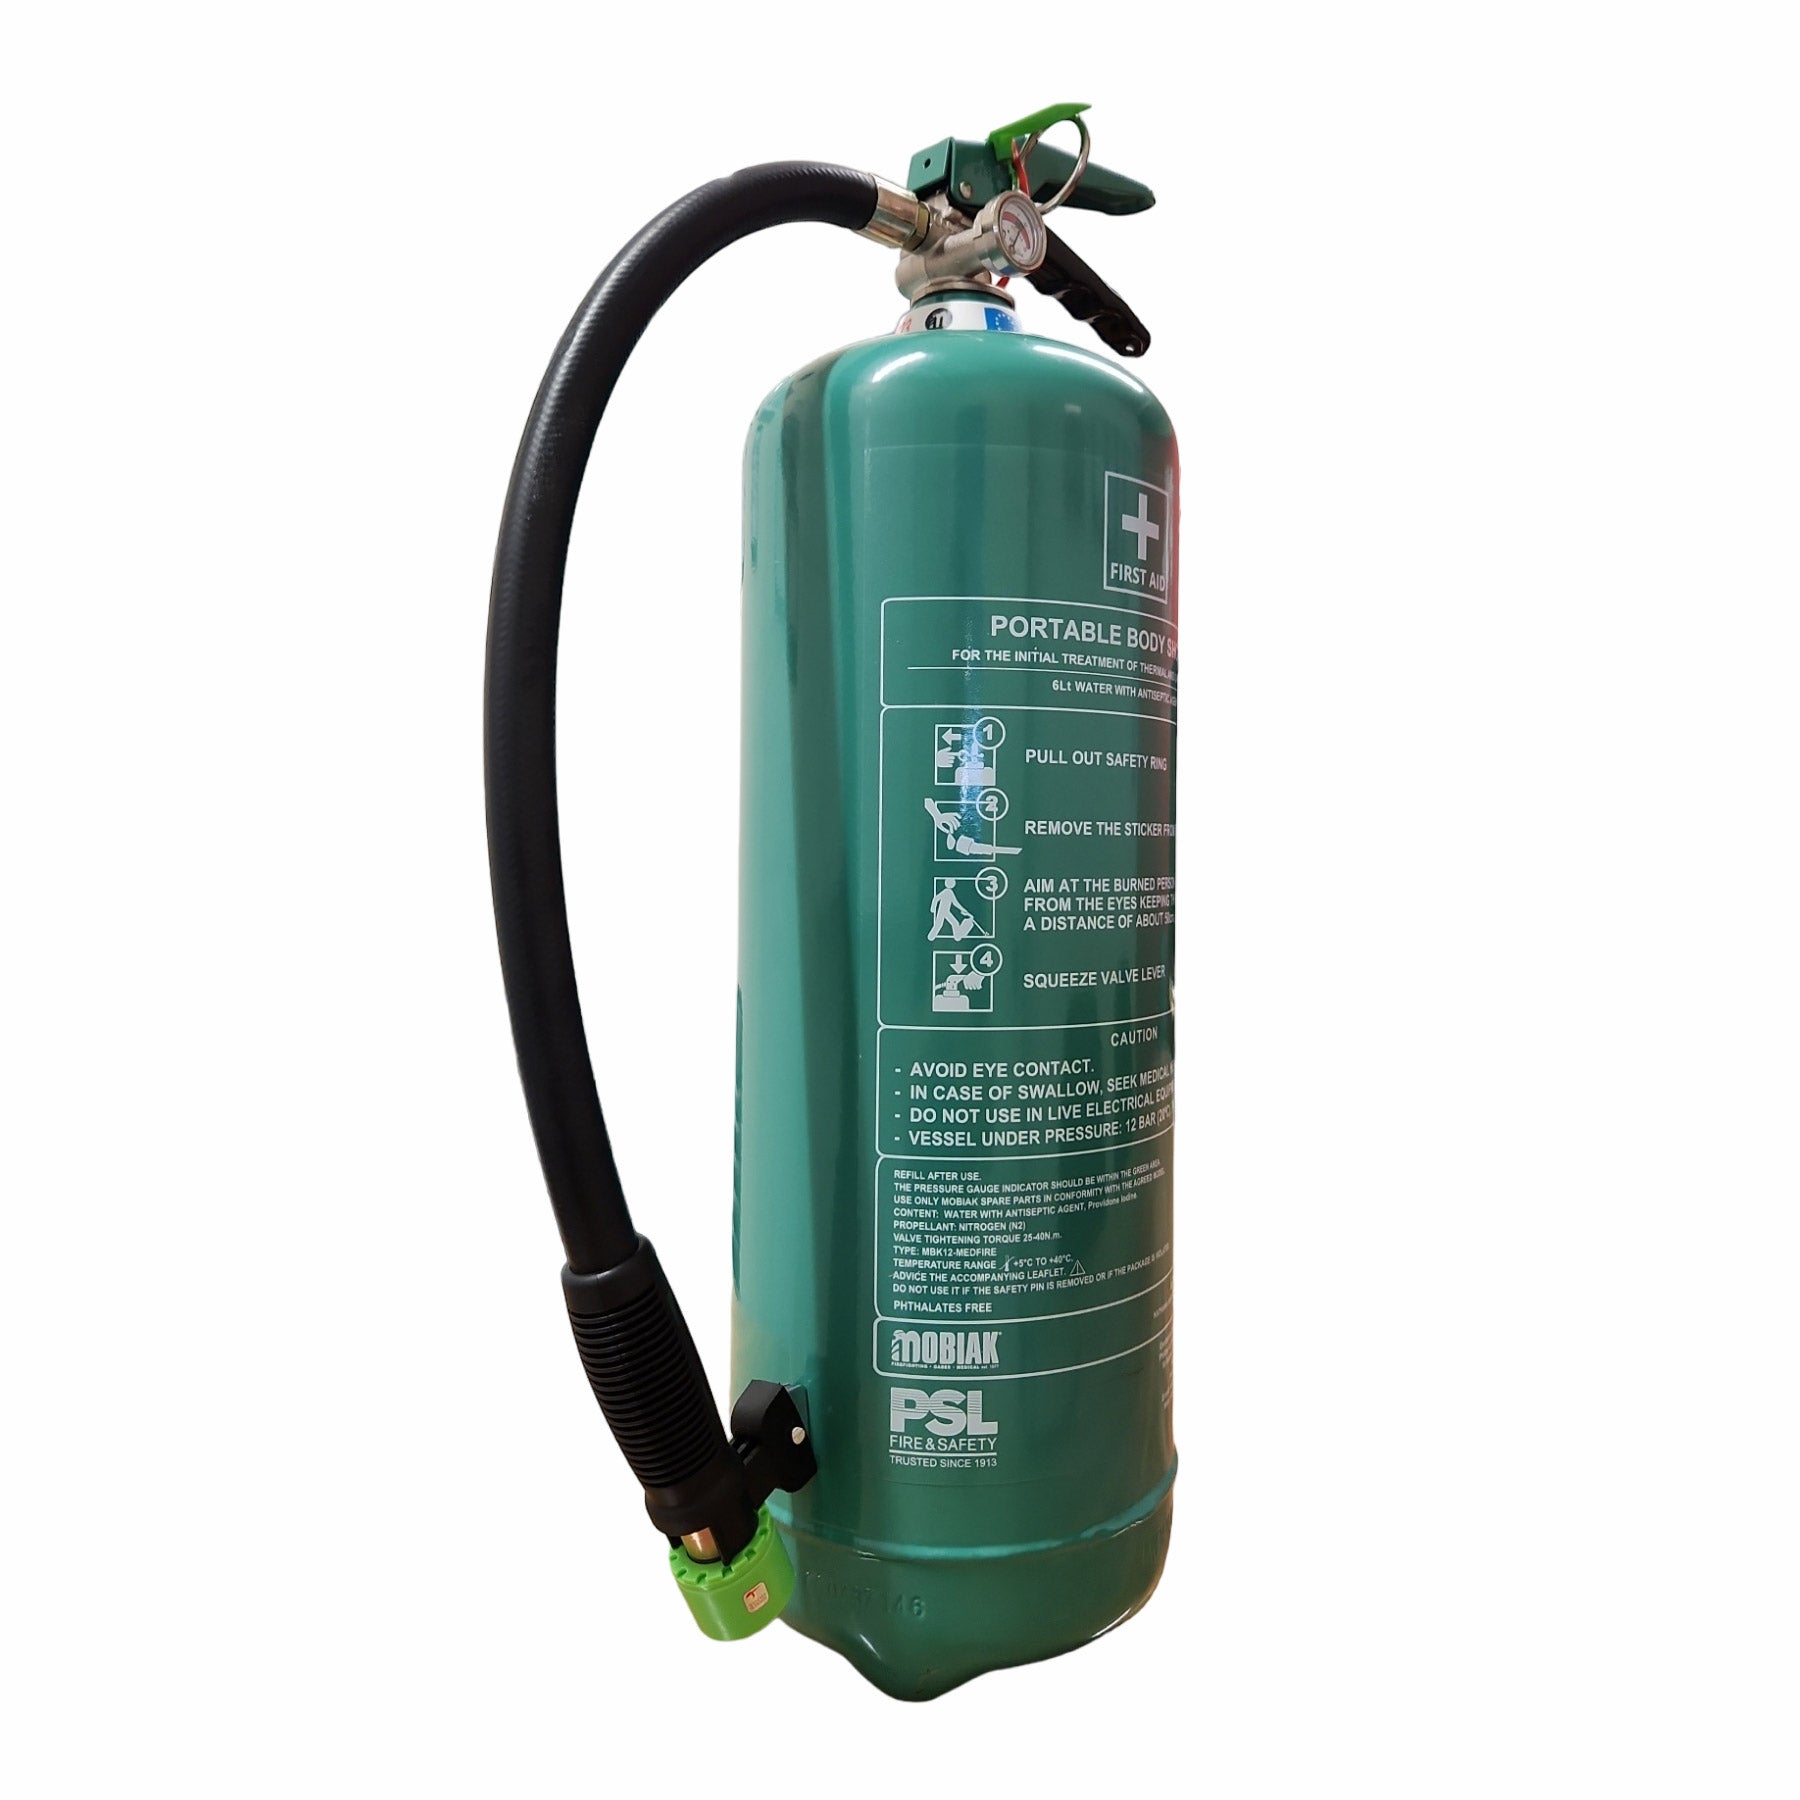 Portable Burns Spray Applicator